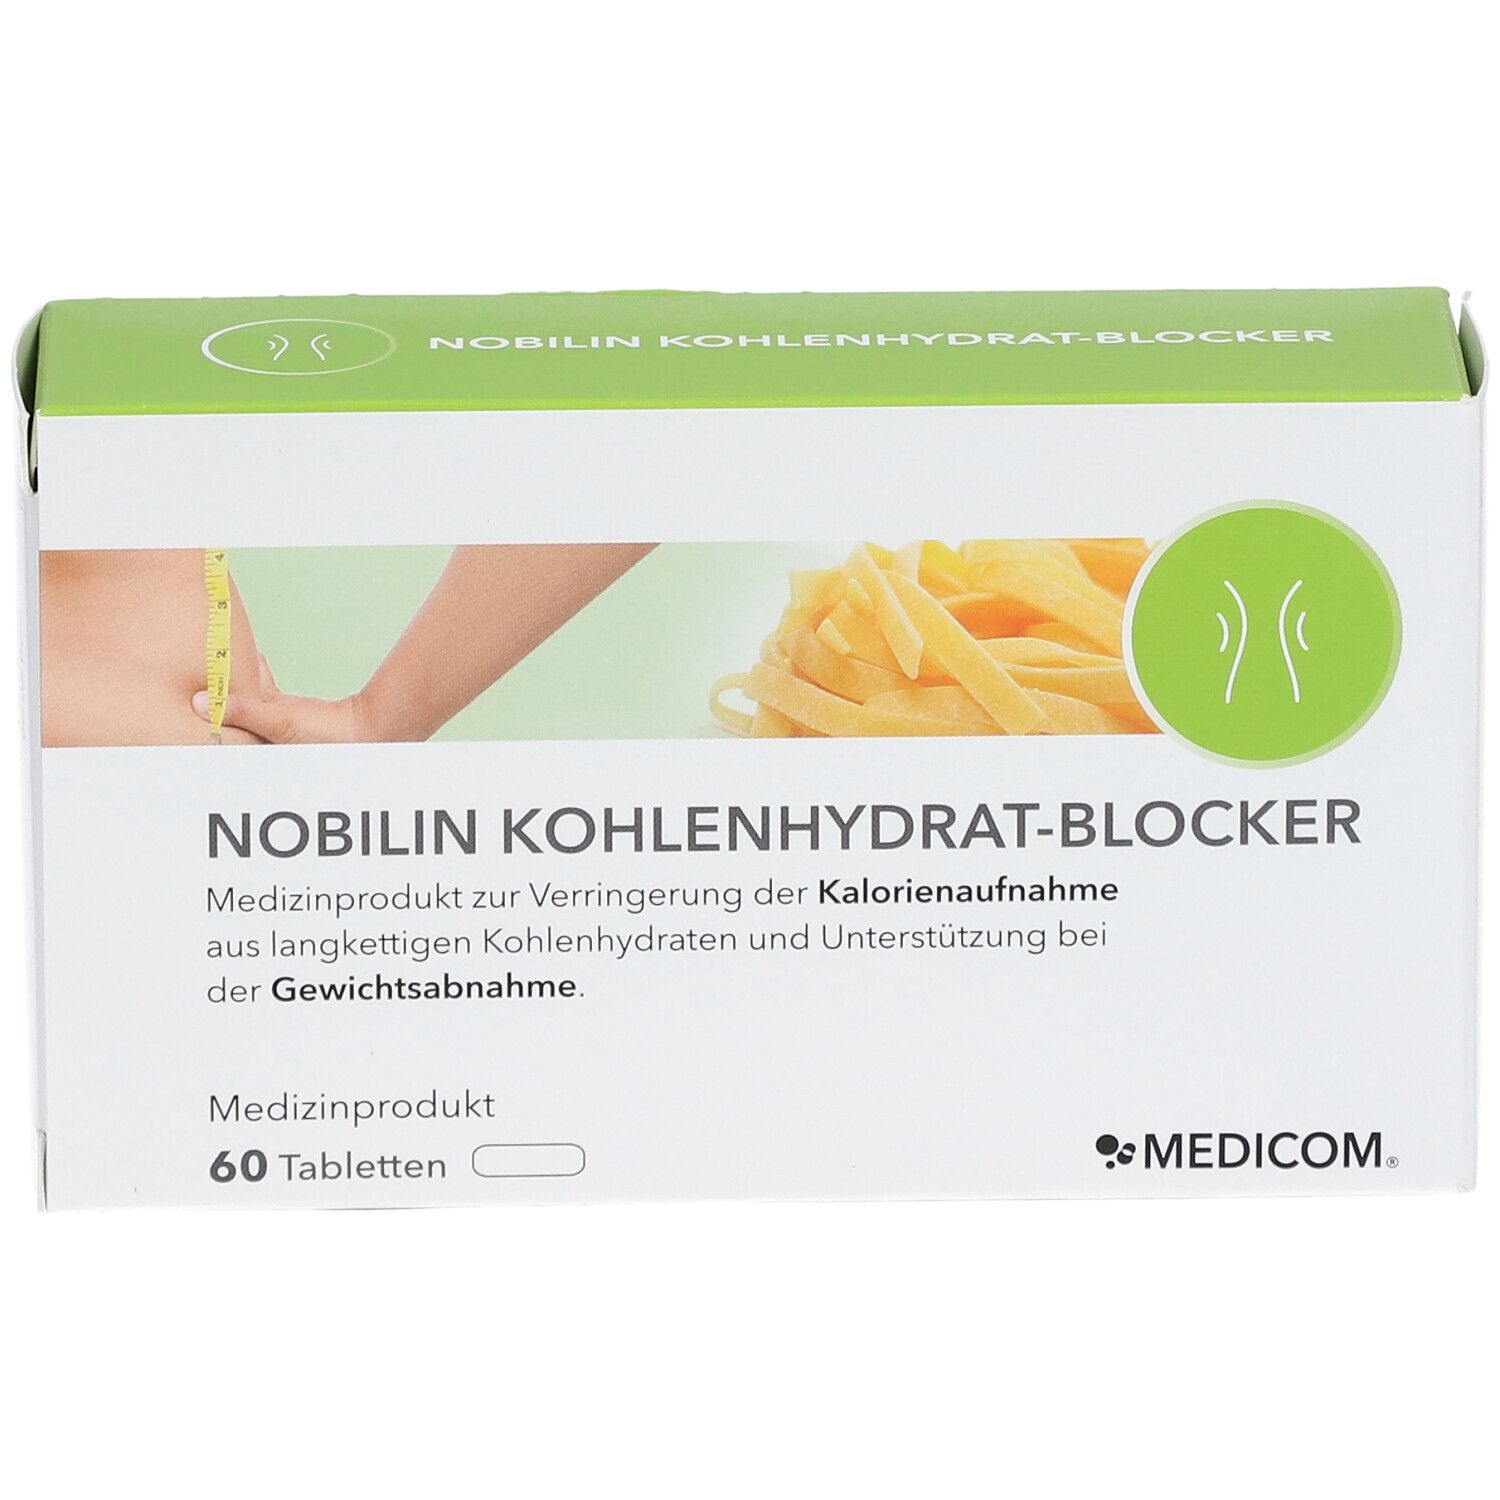 NOBILIN KOHLENHYDRAT-BLOCKER